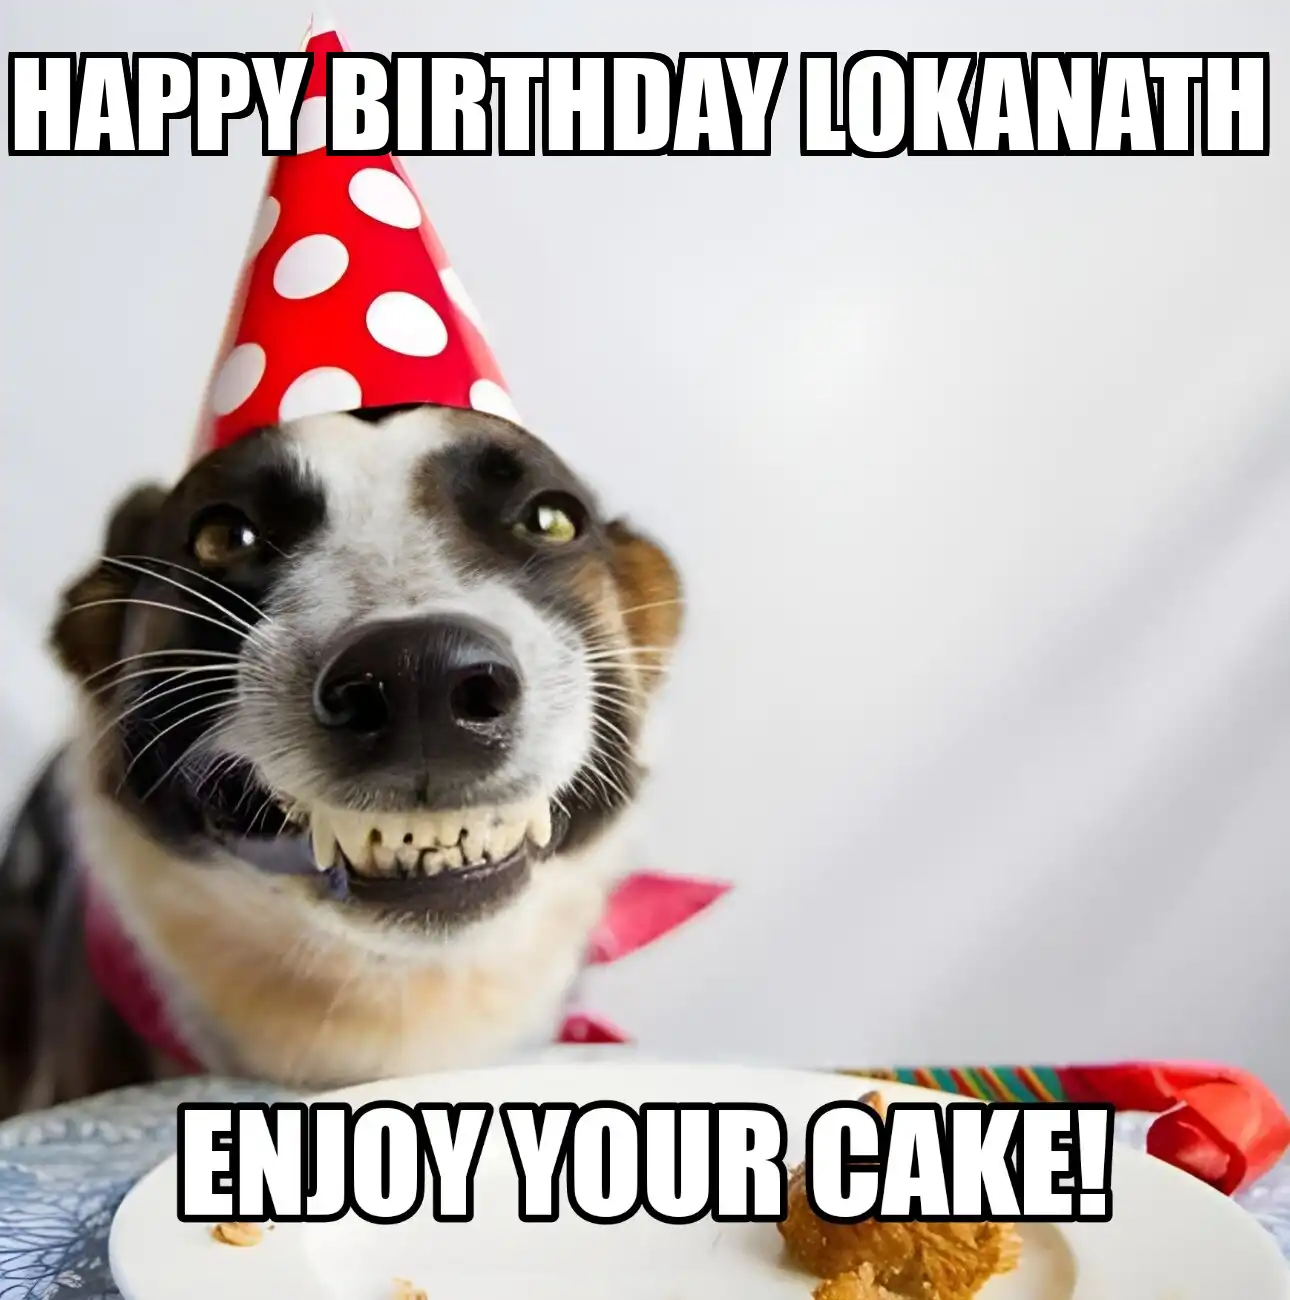 Happy Birthday Lokanath Enjoy Your Cake Dog Meme